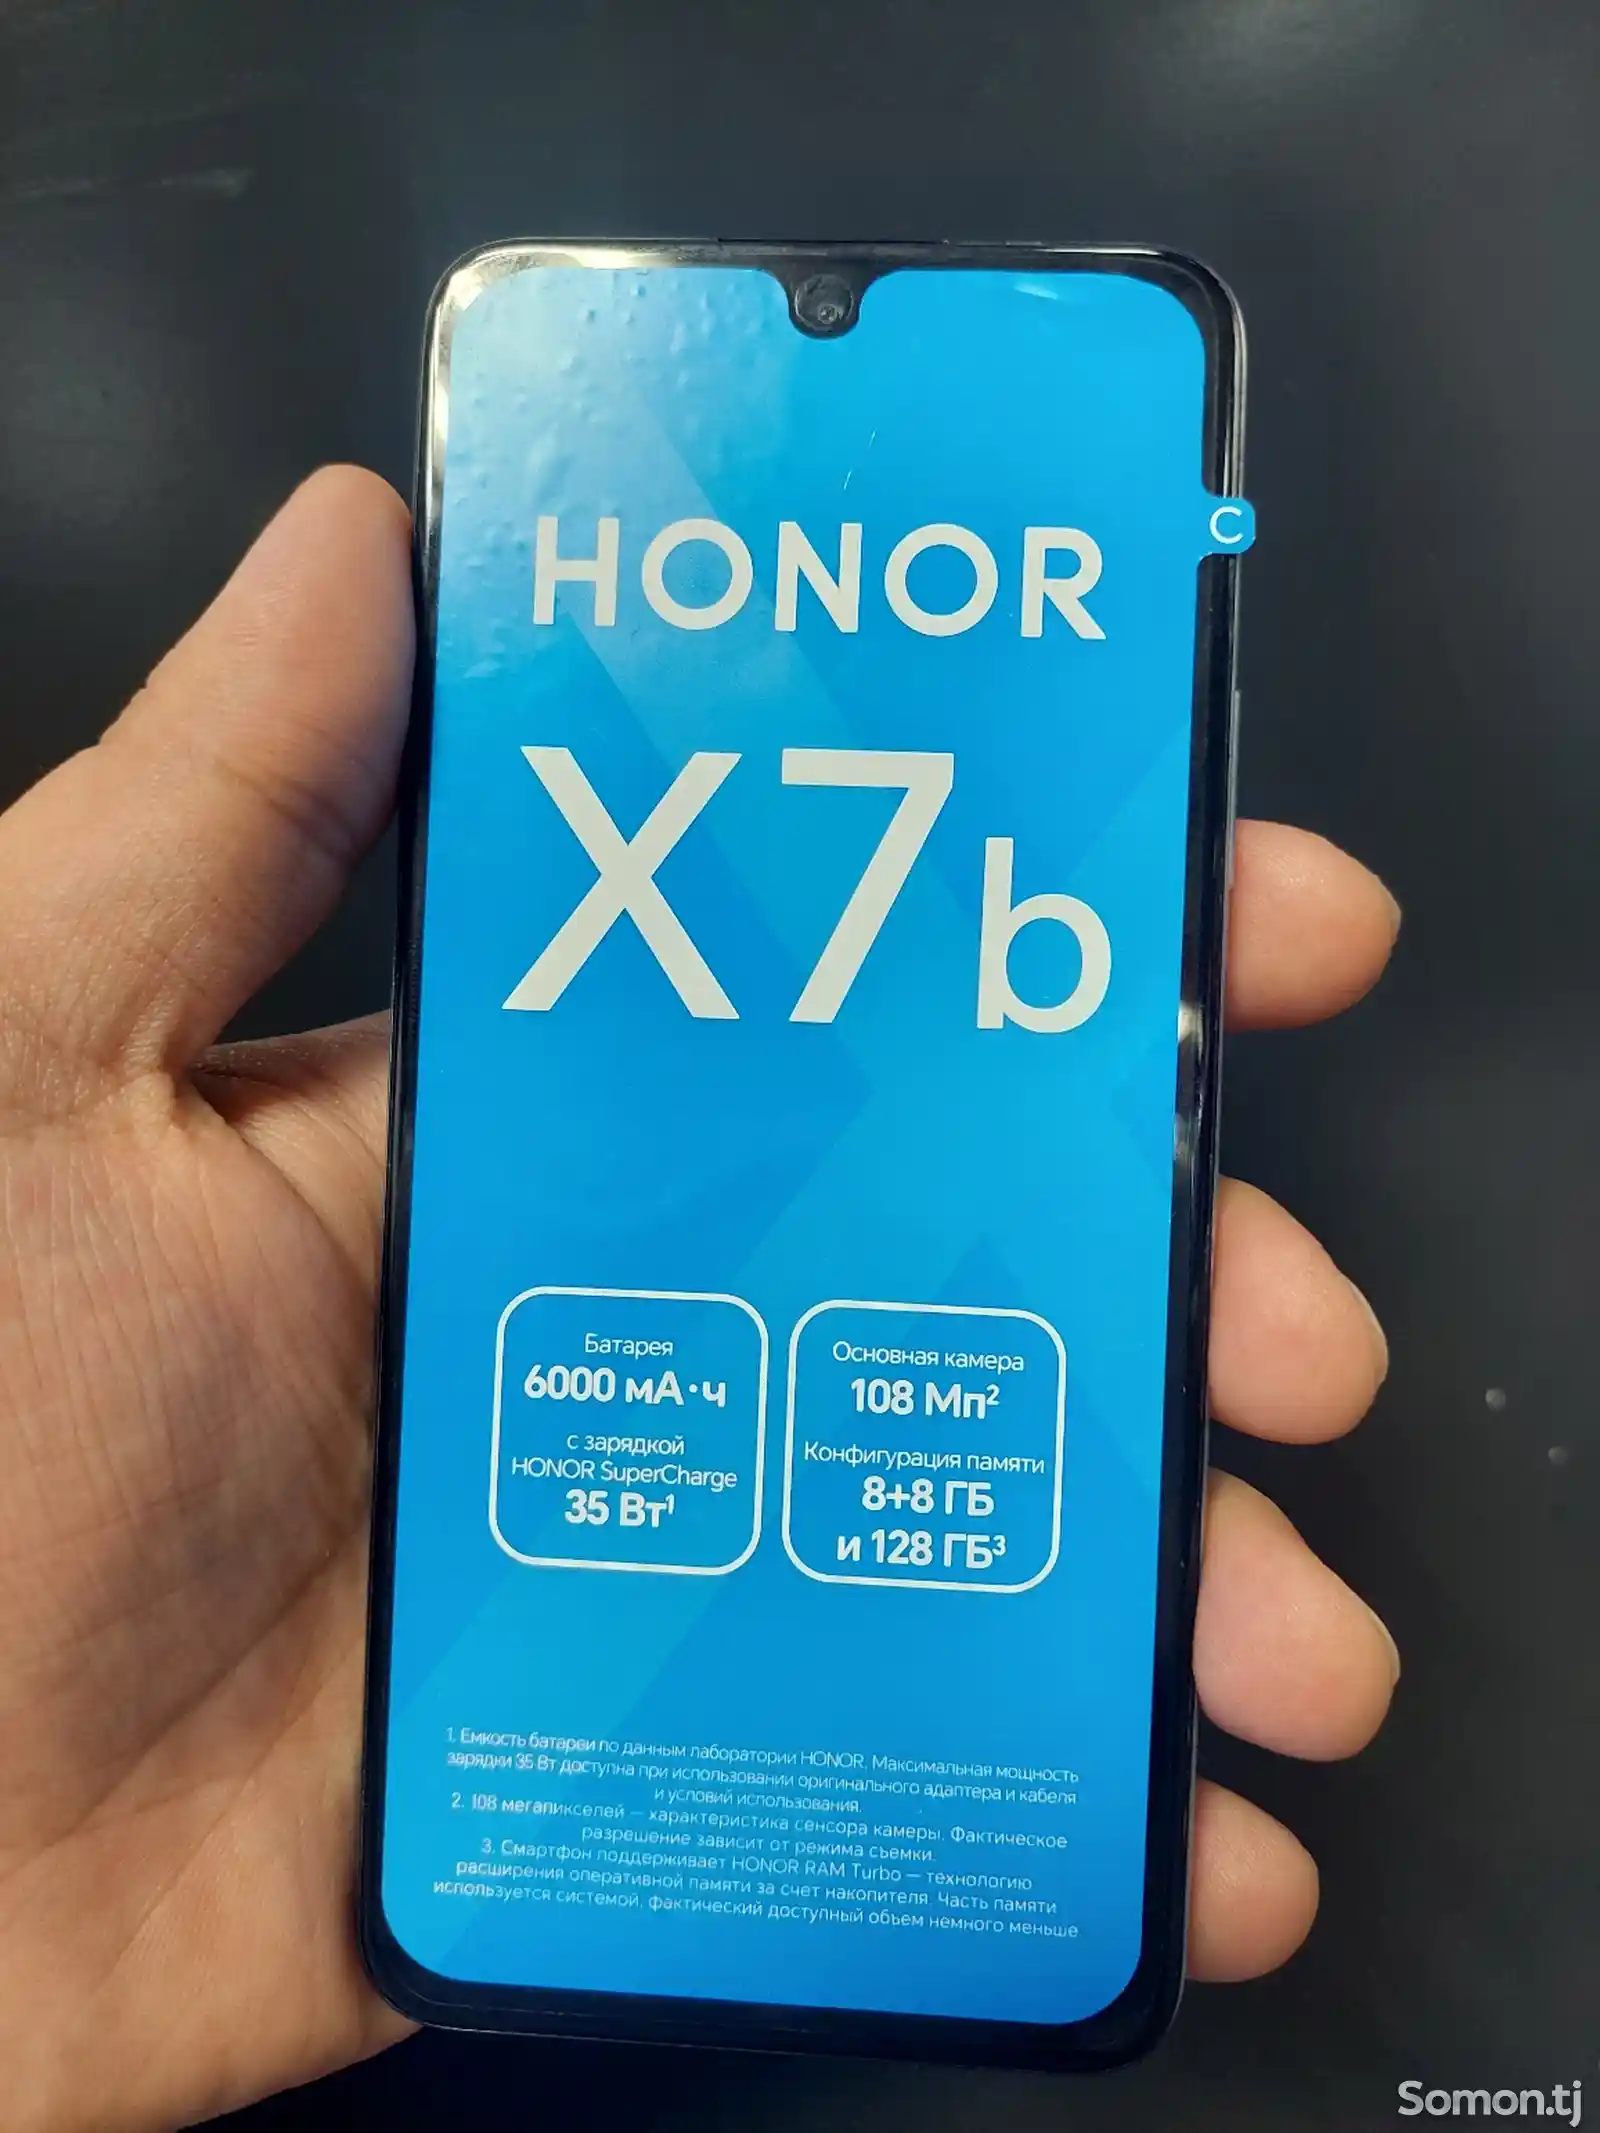 Huawei Honor X7B-2